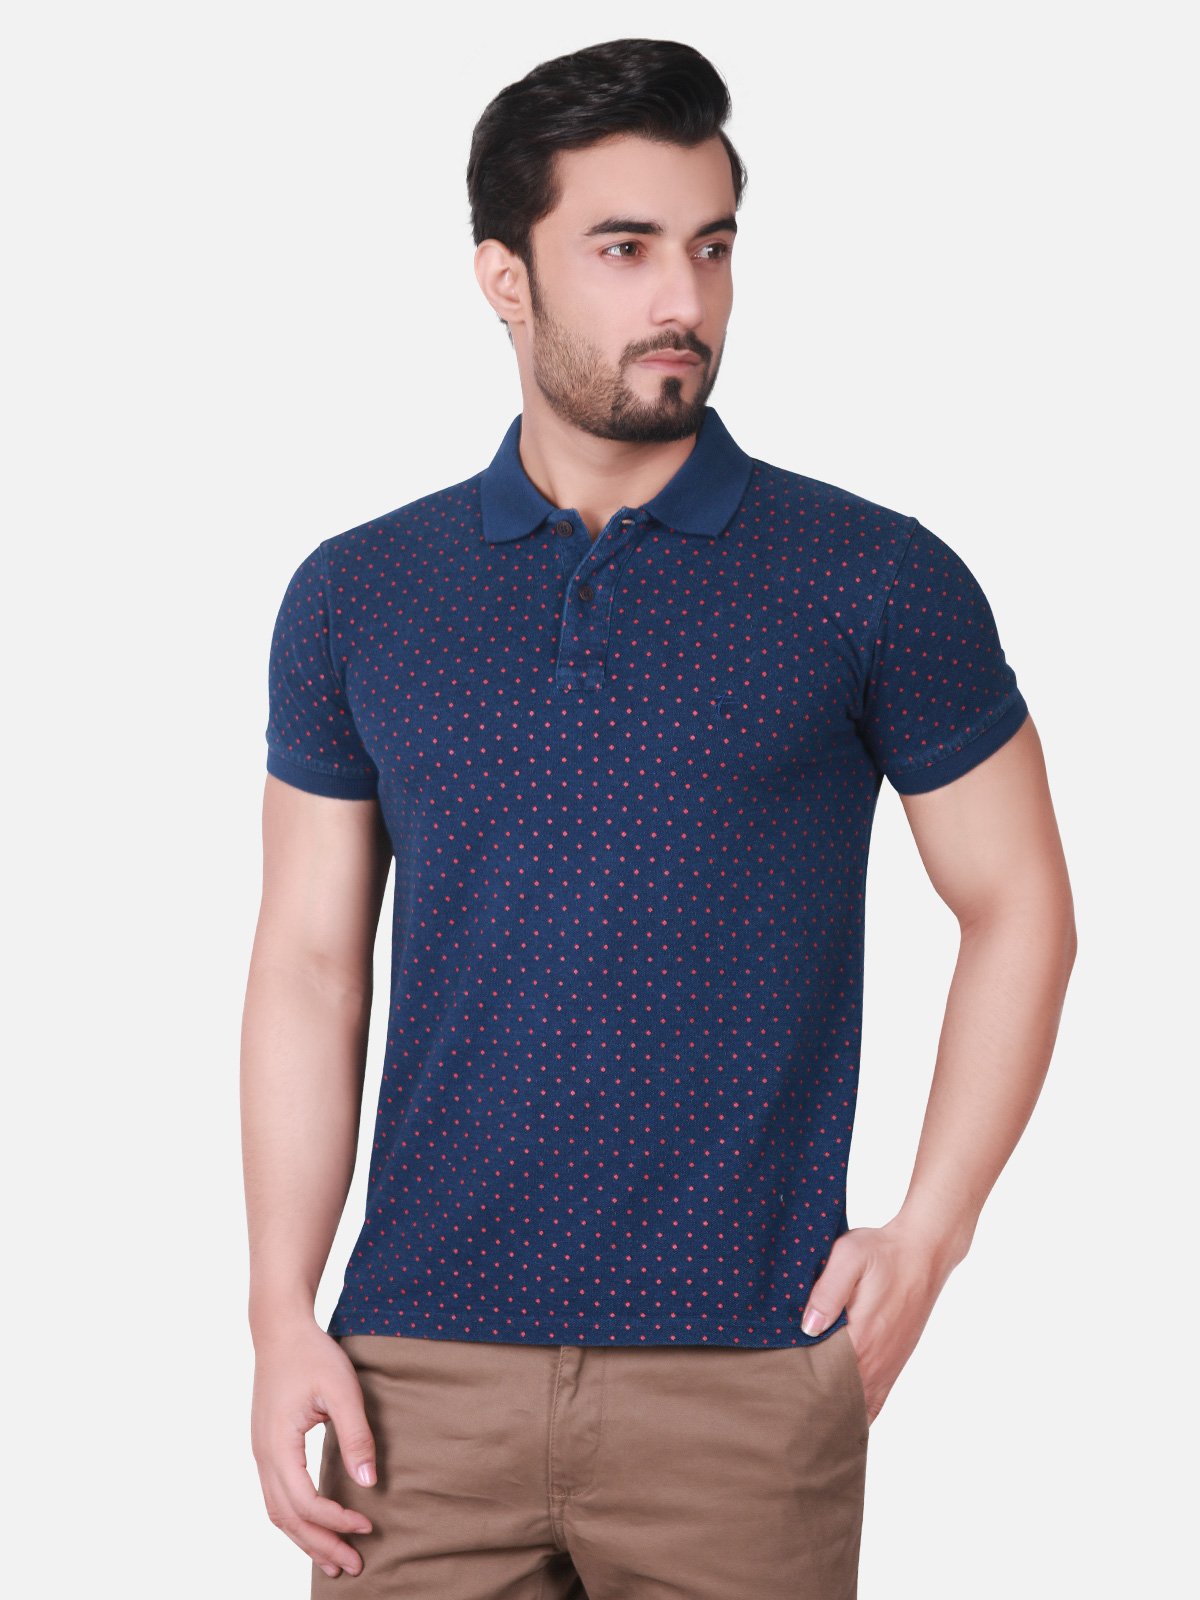 Men's Blue Polo Shirt - FMTTS17-17188